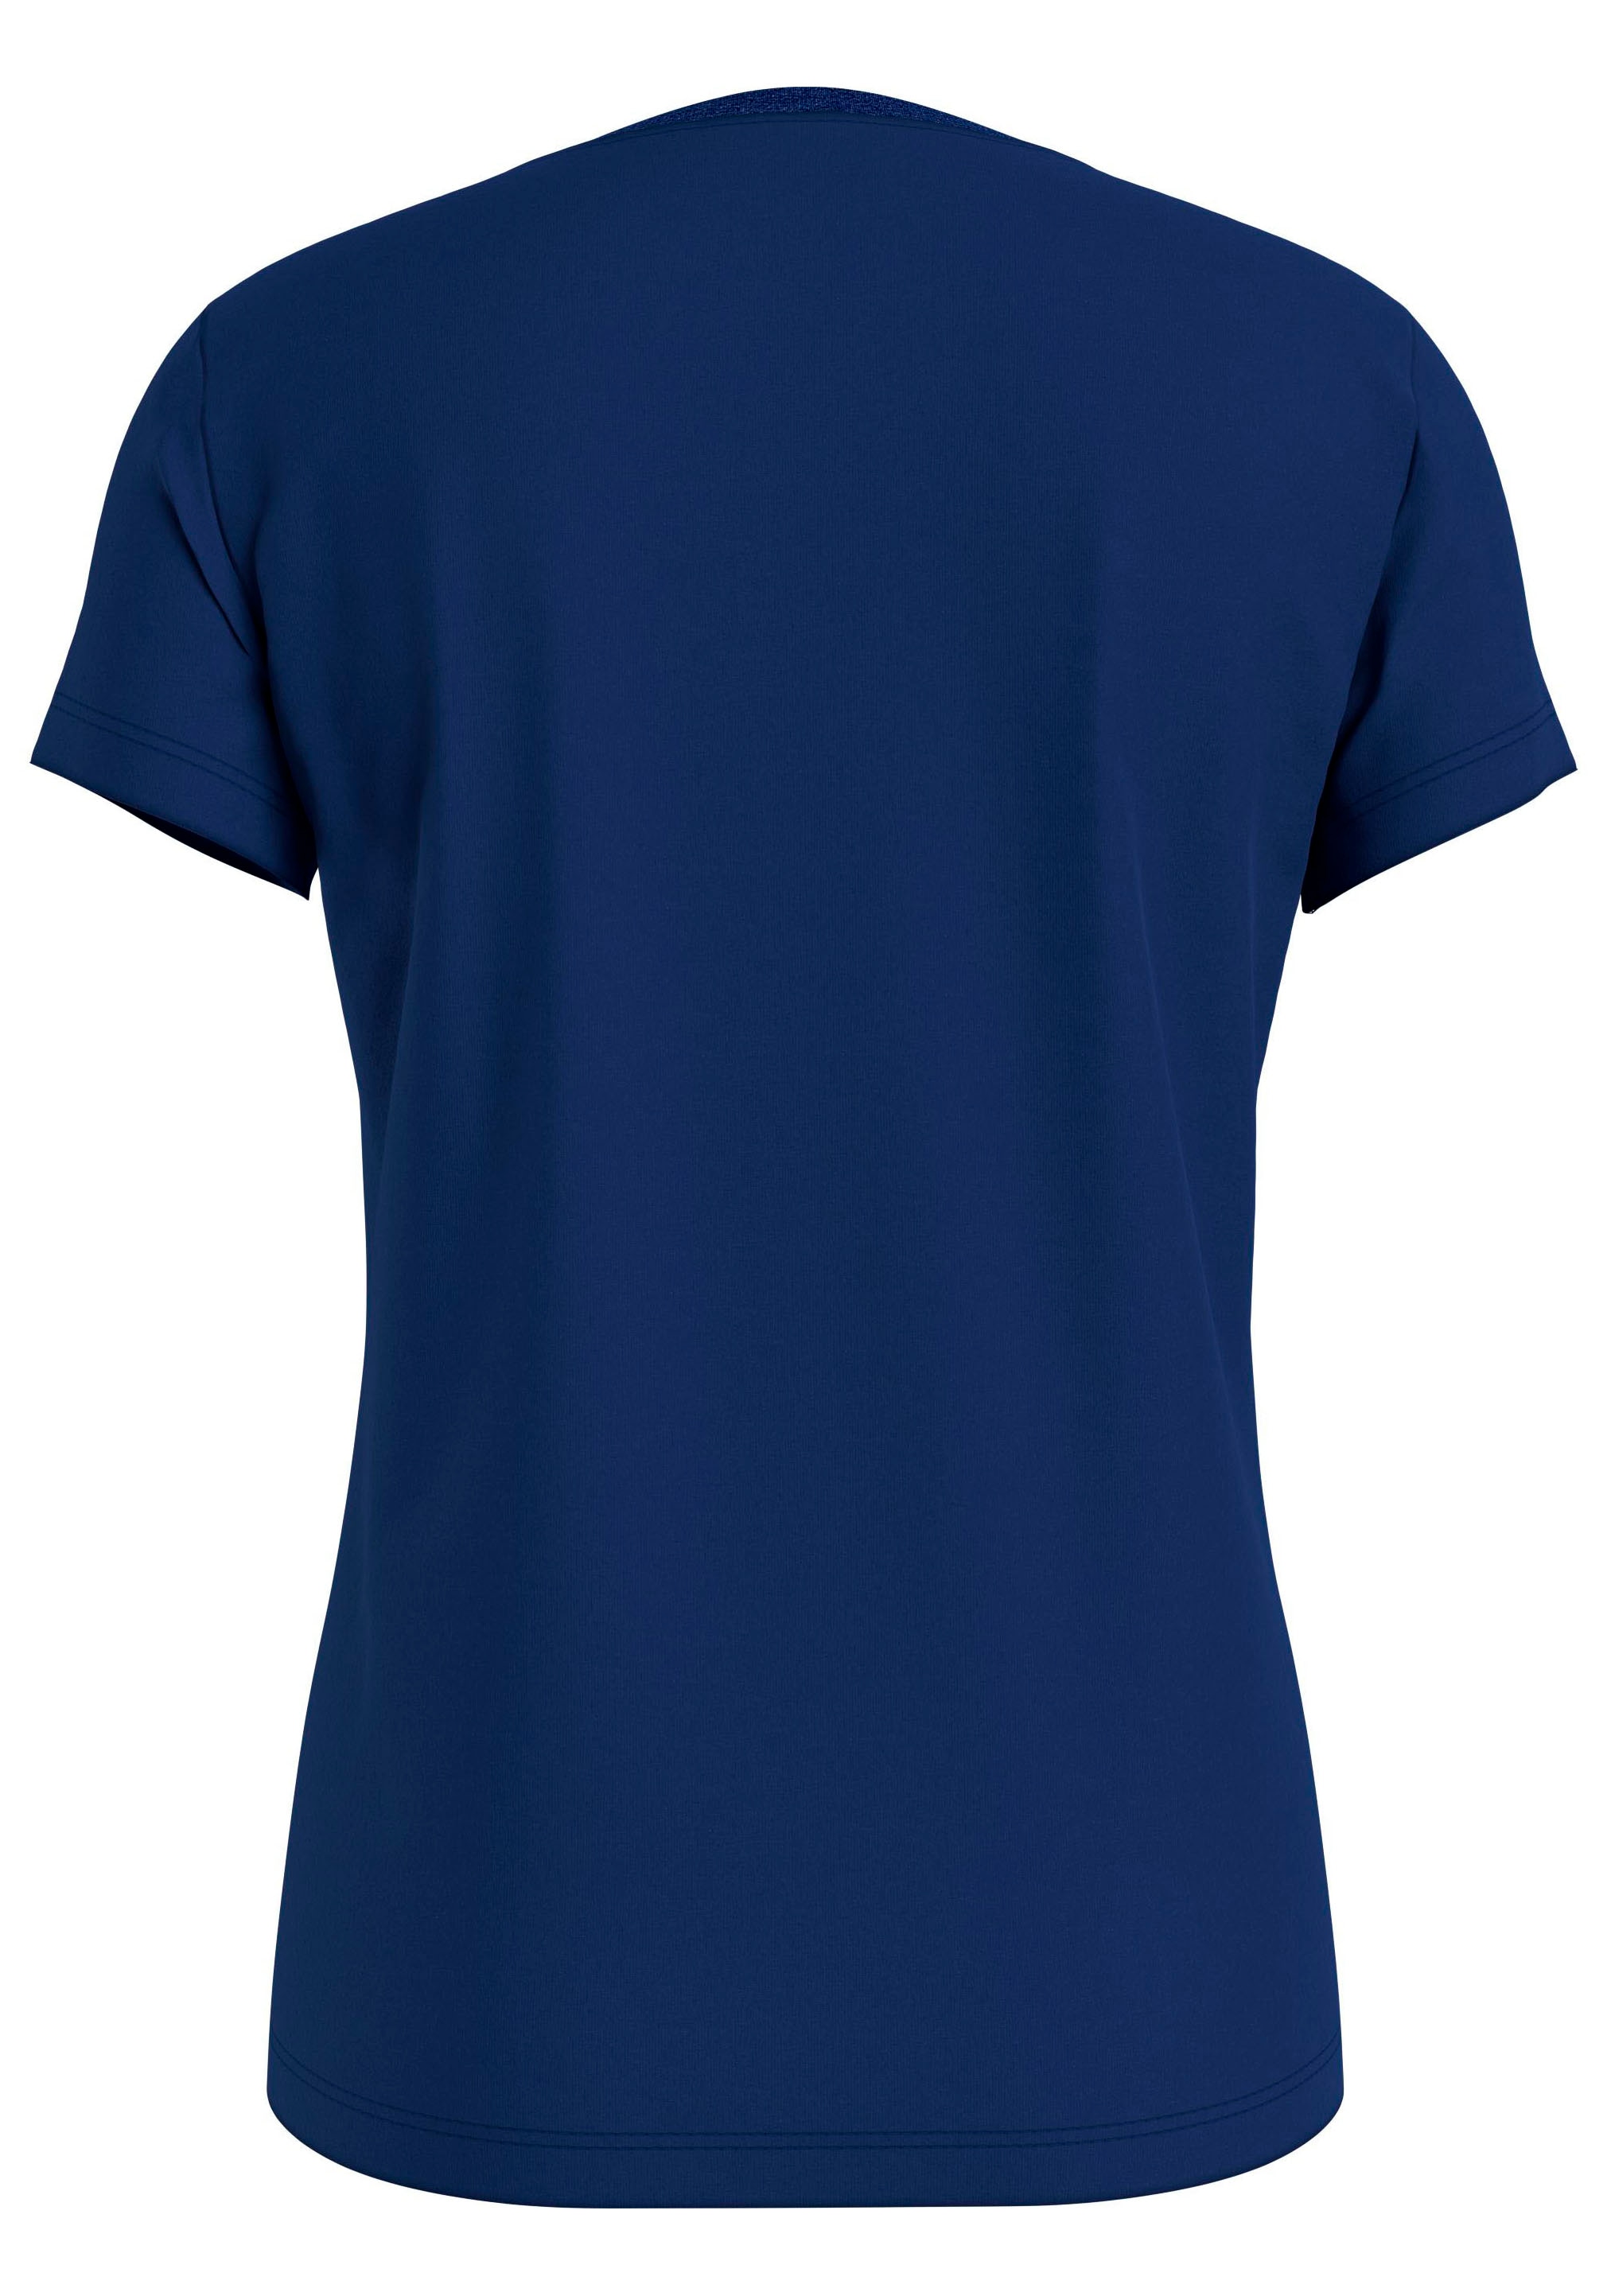 »2PK mit (Packung, ♕ Calvin Klein T-Shirt 2 bei Logoprint TEE«, tlg., 2er-Pack),